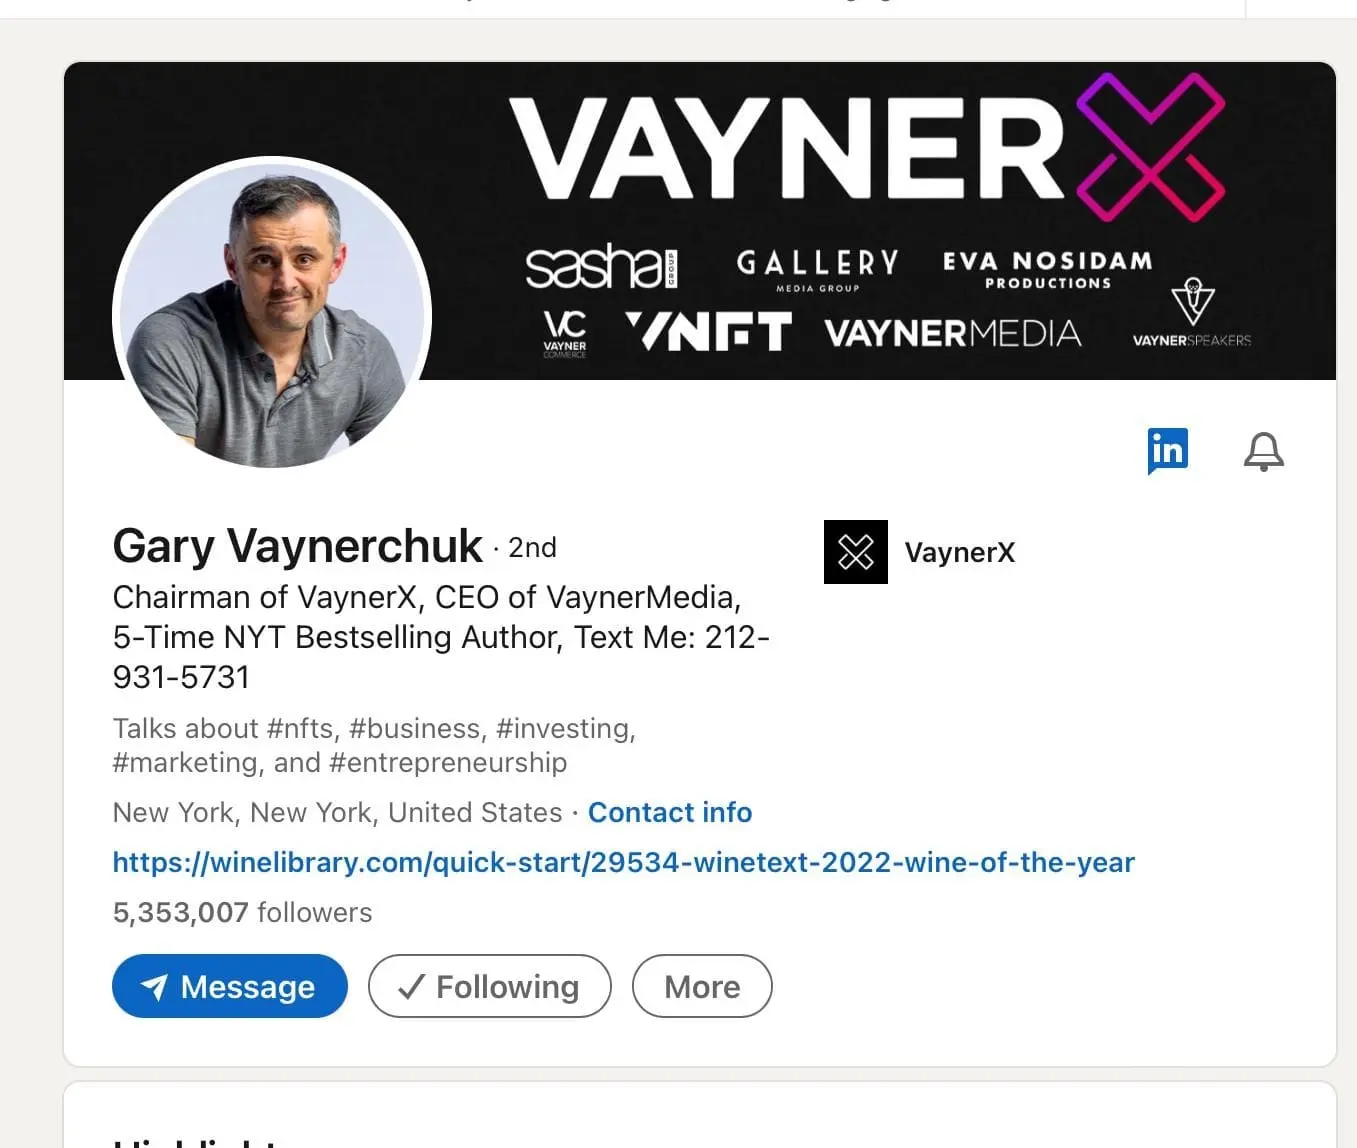 Gary Vaynerchuk’s LinkedIn